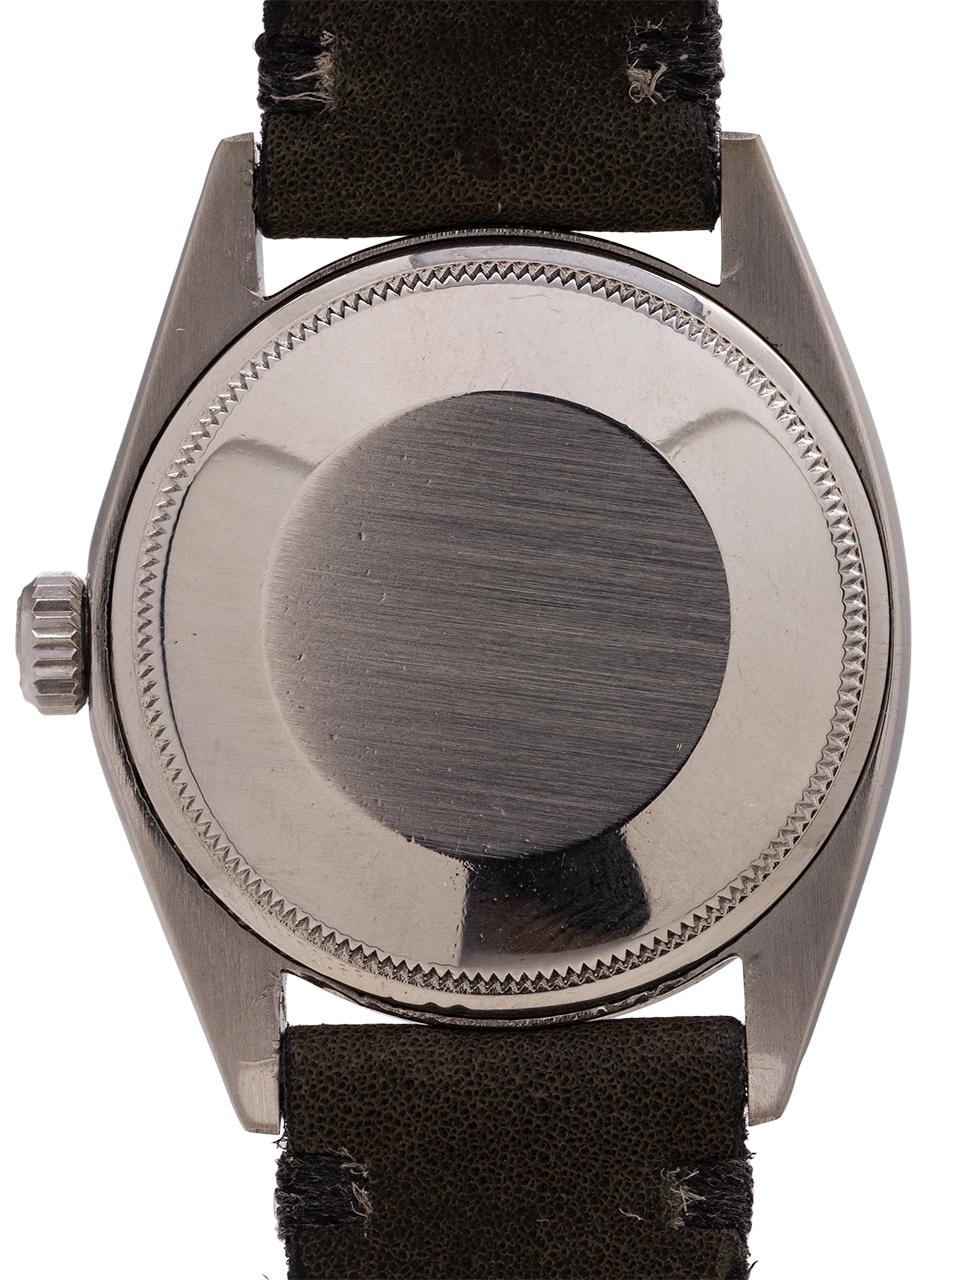 Men's Rolex stainless steel Oyster Perpetual self winding Wristwatch Ref 1500, c1968